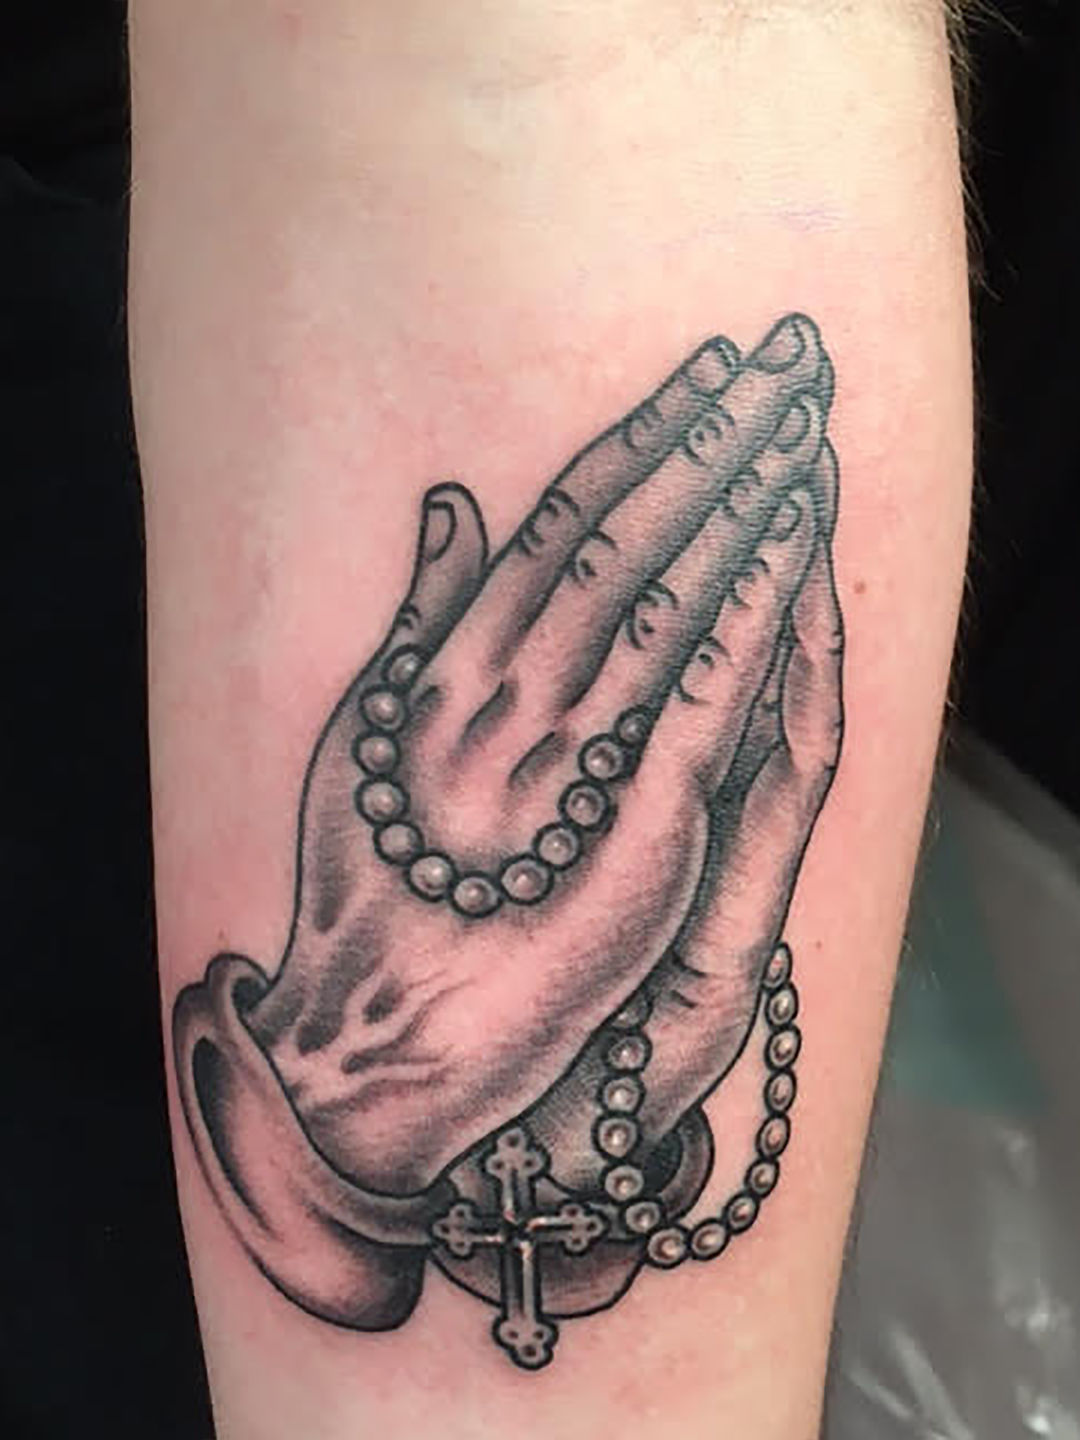 Brent_praying_hands